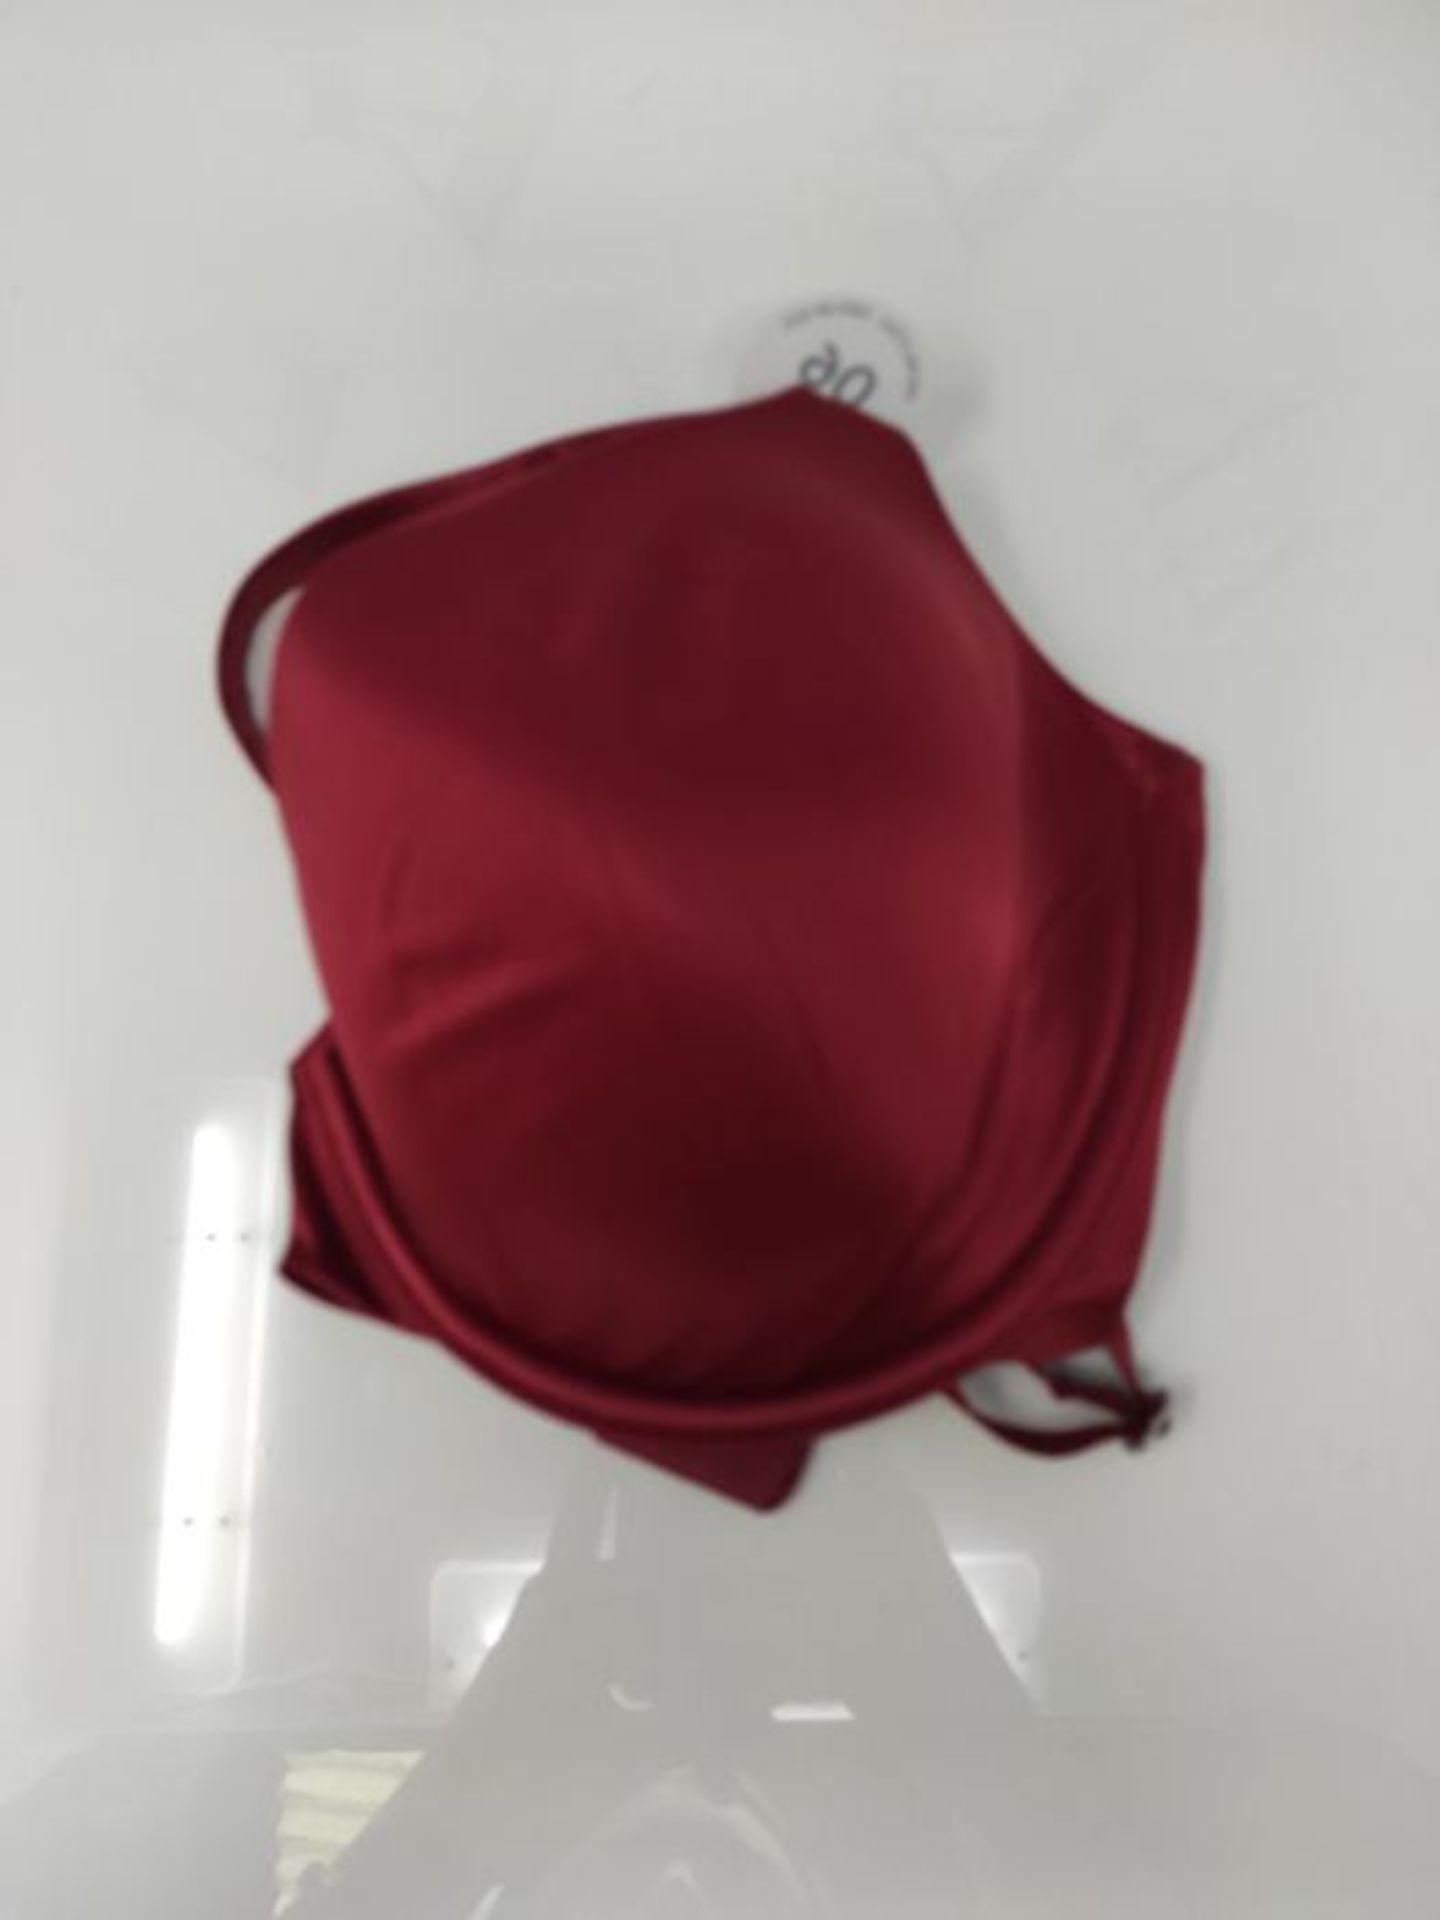 ESPRIT Women's Soft Shine Sexy Padded Bra, Cherry red, 40C - Image 2 of 2